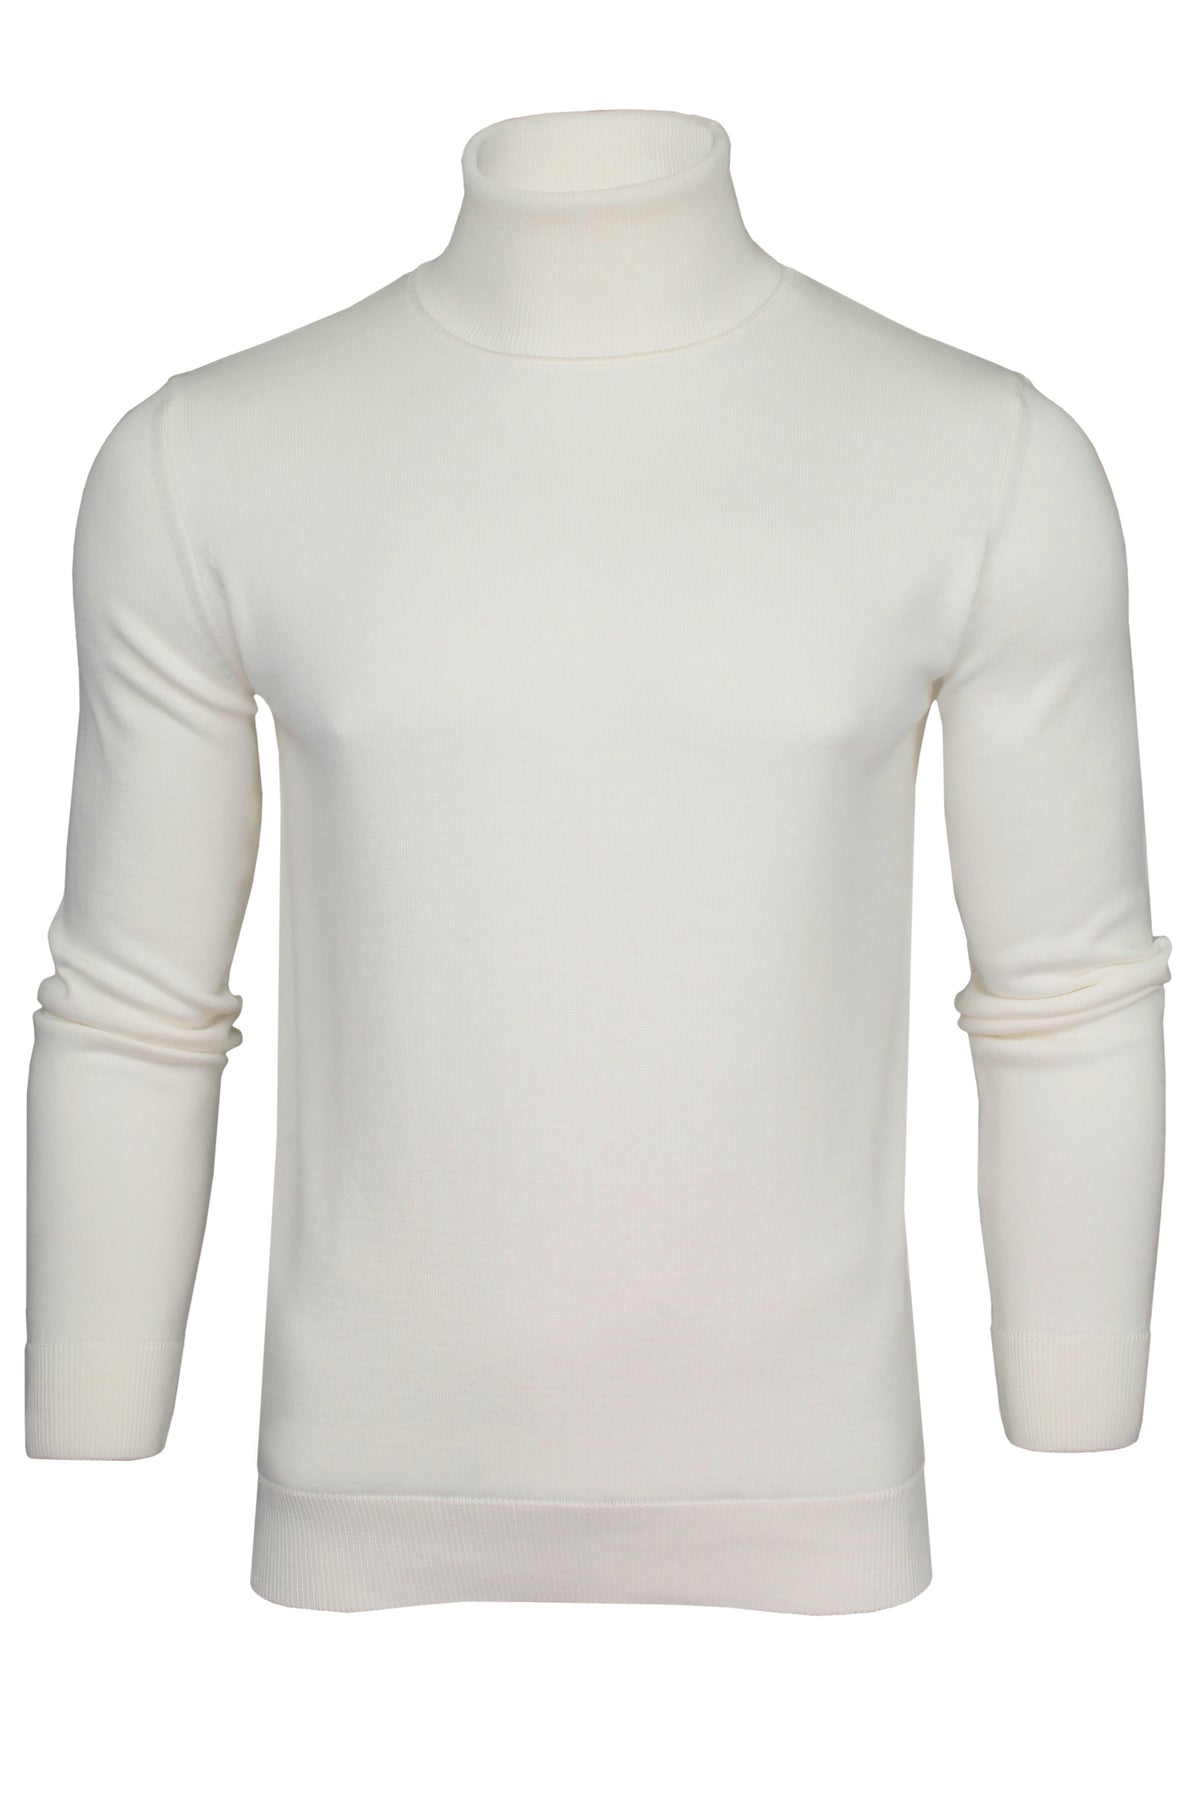 Xact Mens Roll Neck Jumper - 100% Cotton - Long Sleeved, 01, XK1004, Winter White